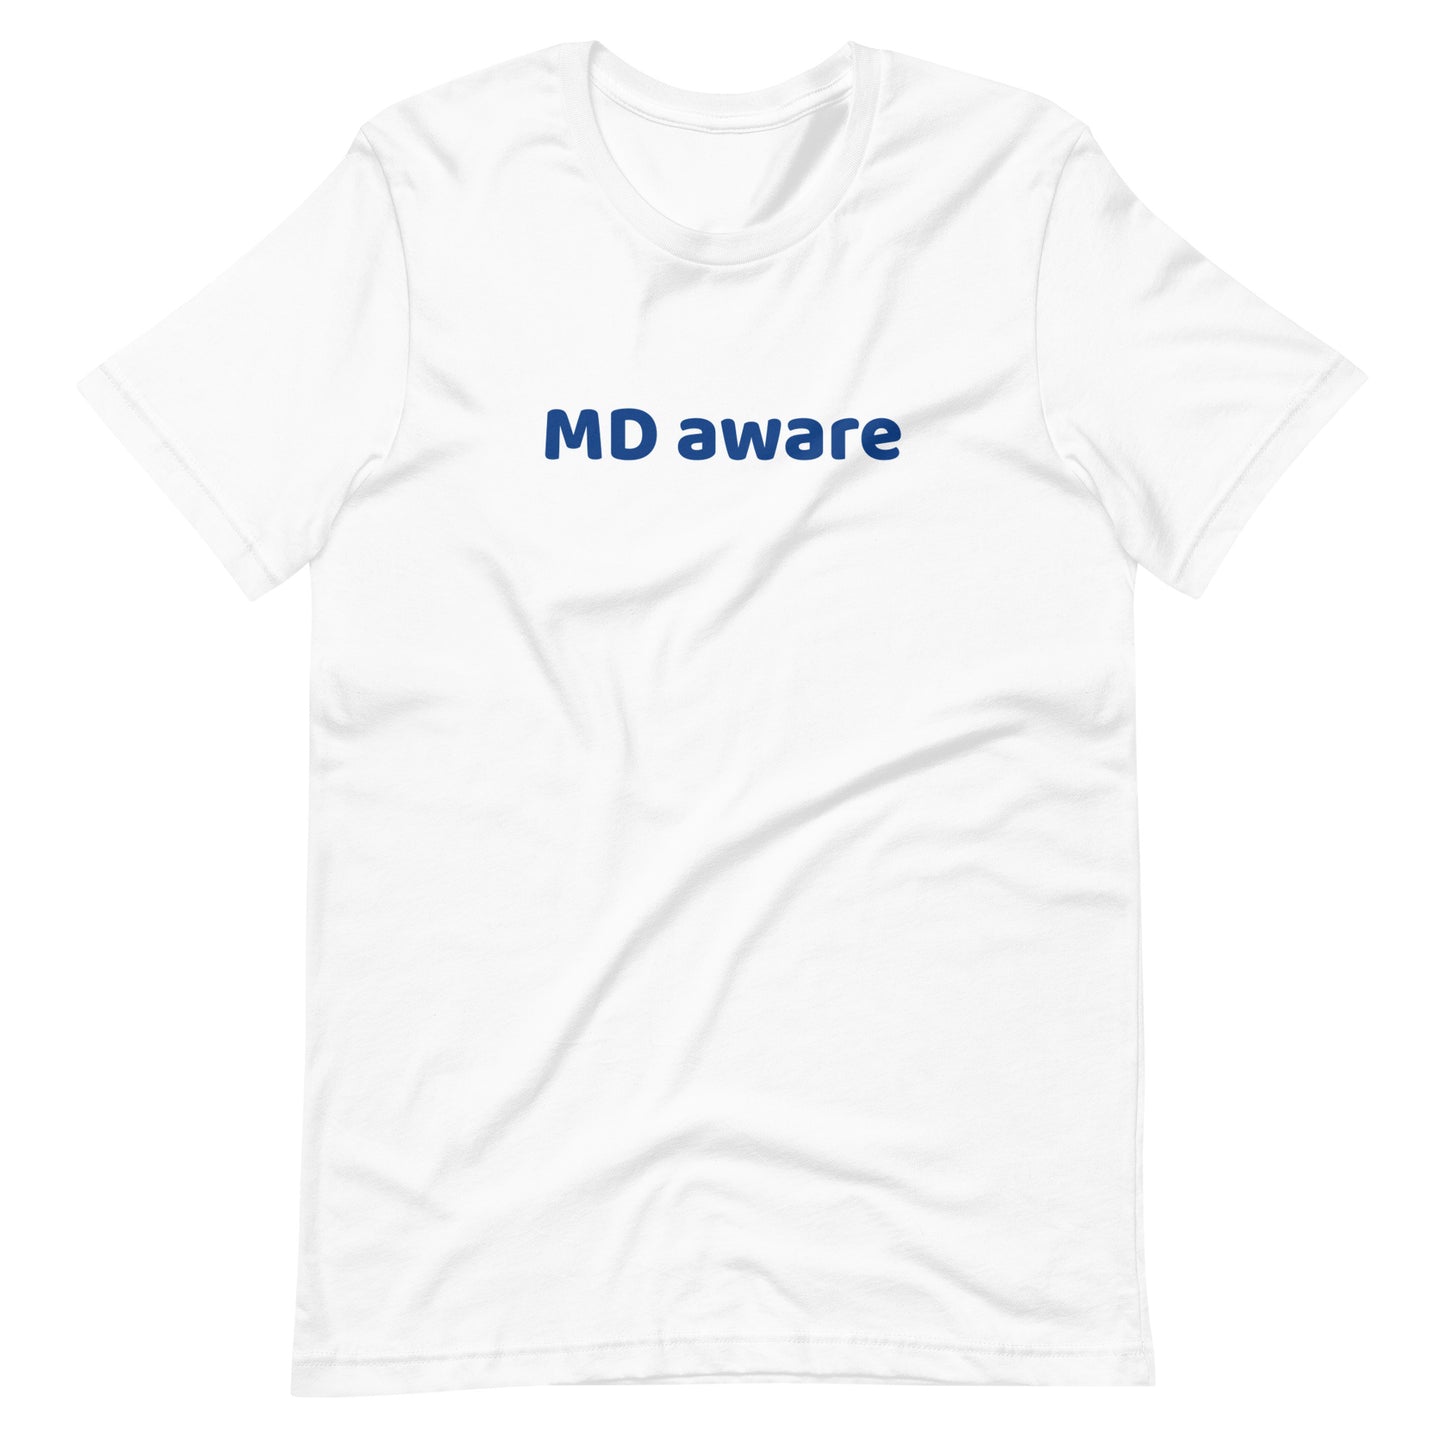 Medical Lingo: MD aware